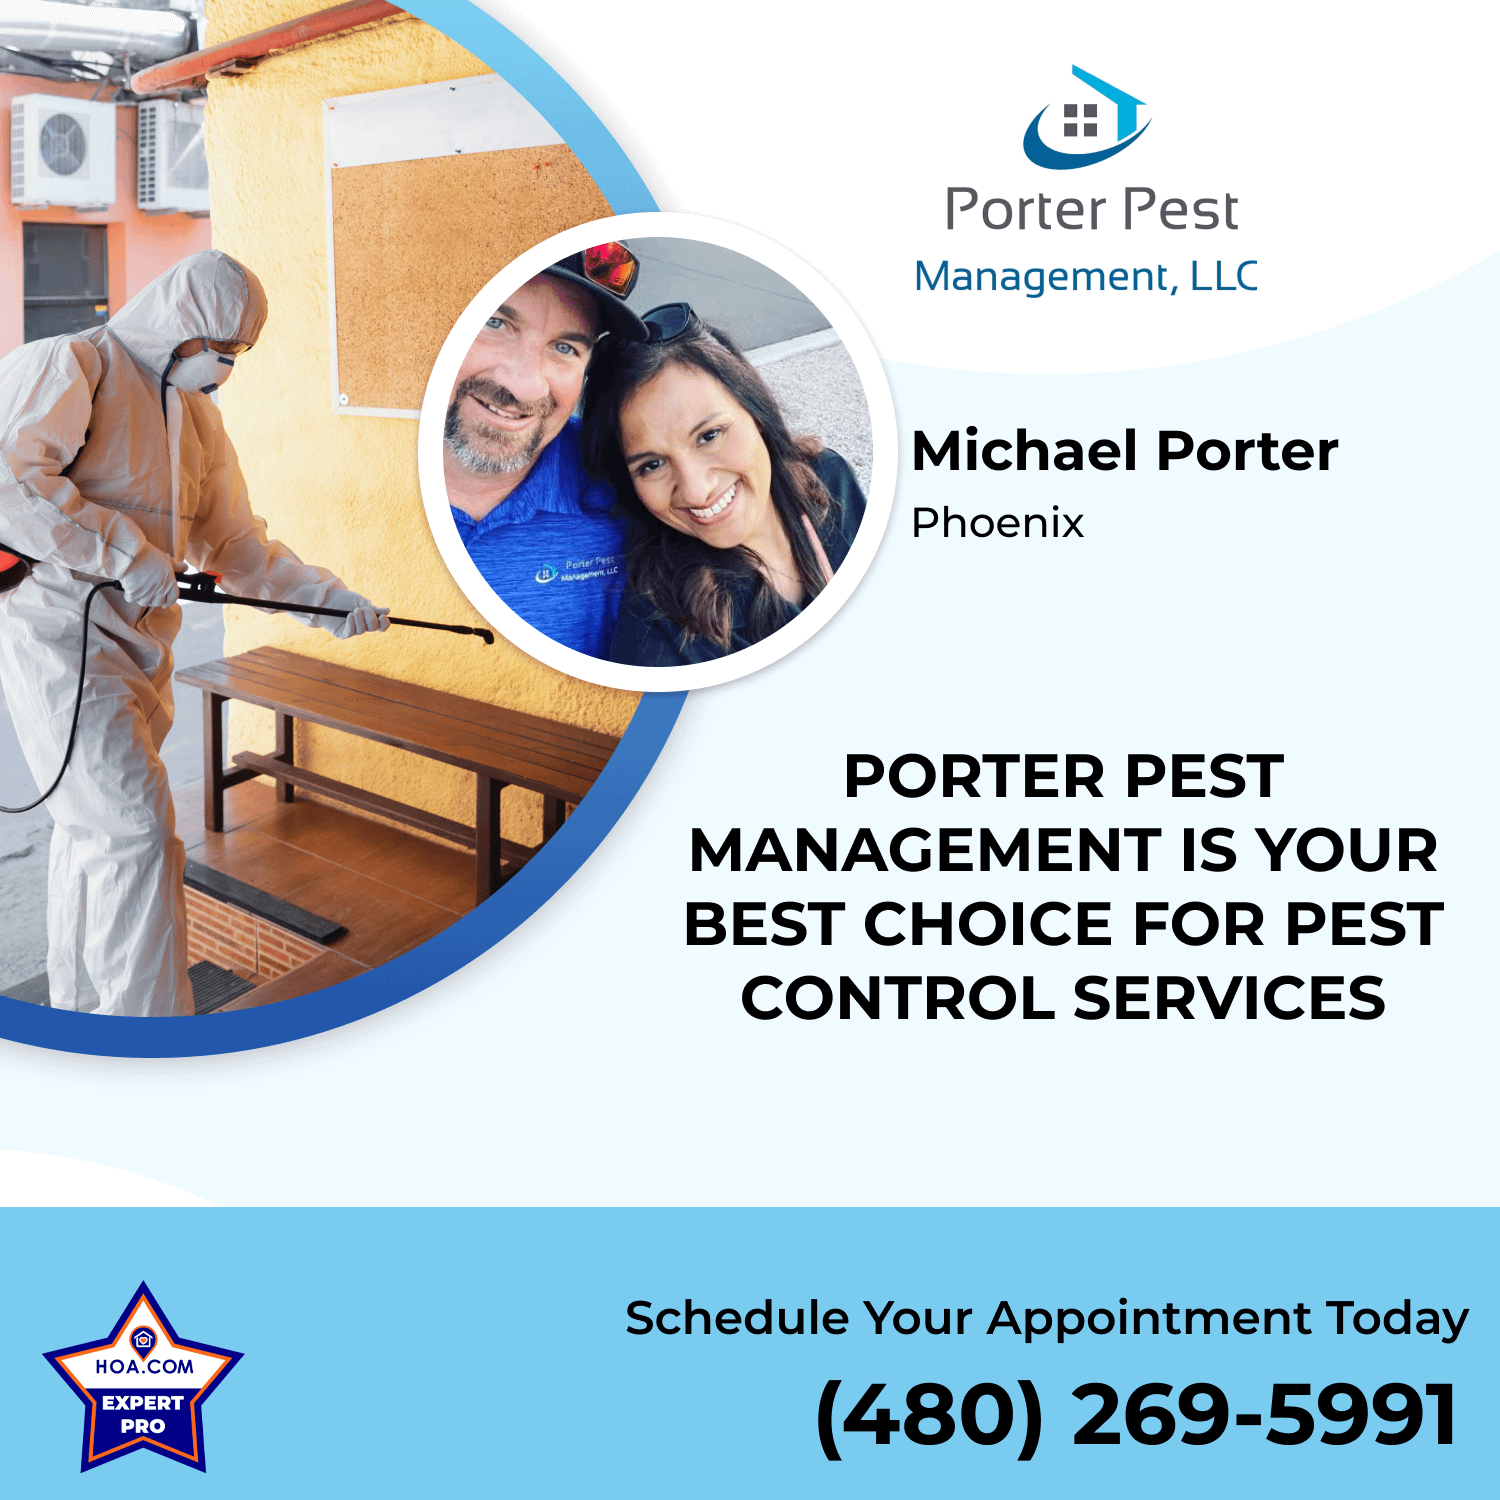 Services of Porter Pest Maanagement, LLC